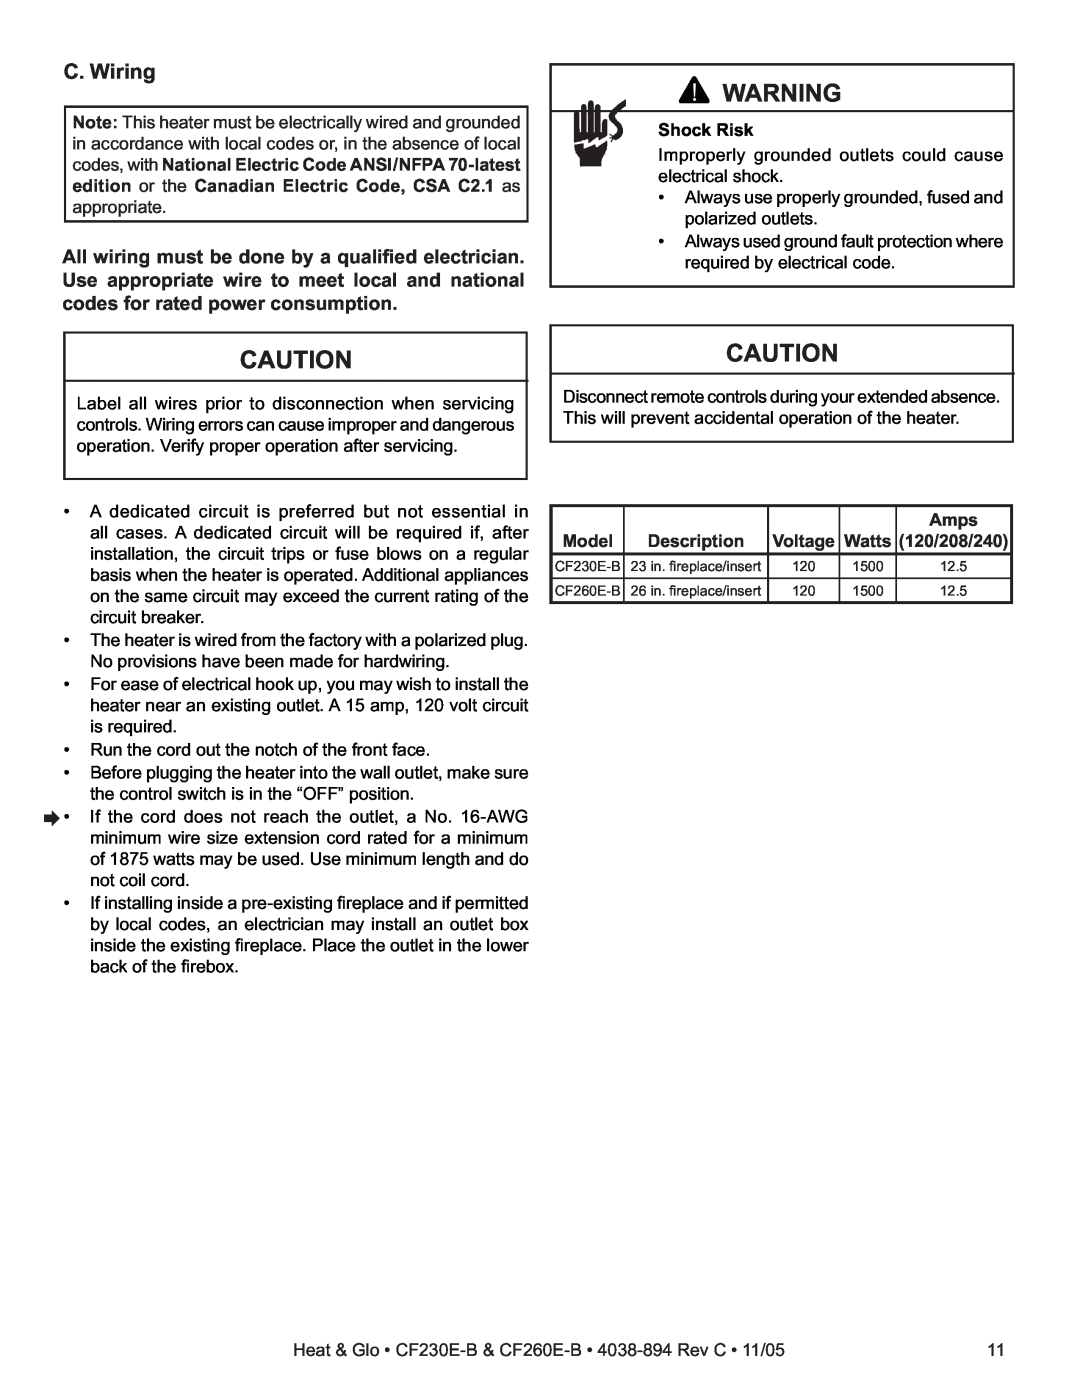 Heat & Glo LifeStyle CF260E-B, CF230E-B owner manual C. Wiring, Shock Risk, Amps, Description, Watts, 120/208/240 